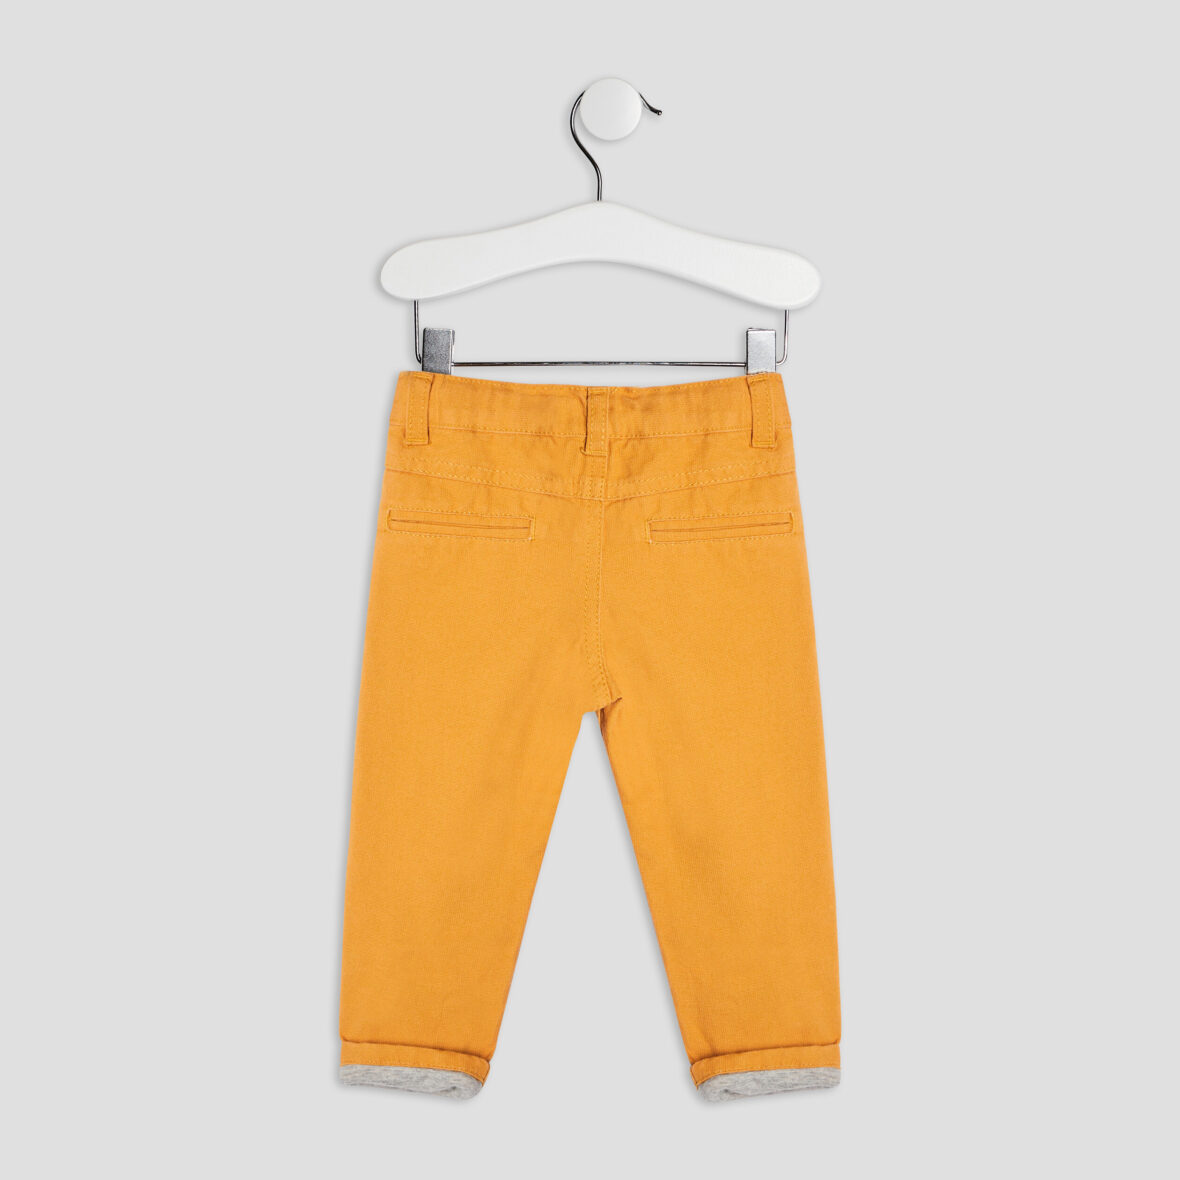 pantalon-slim-taille-ajustable-creeks-jaune-moutarde-bebeg-a-36165600029690025